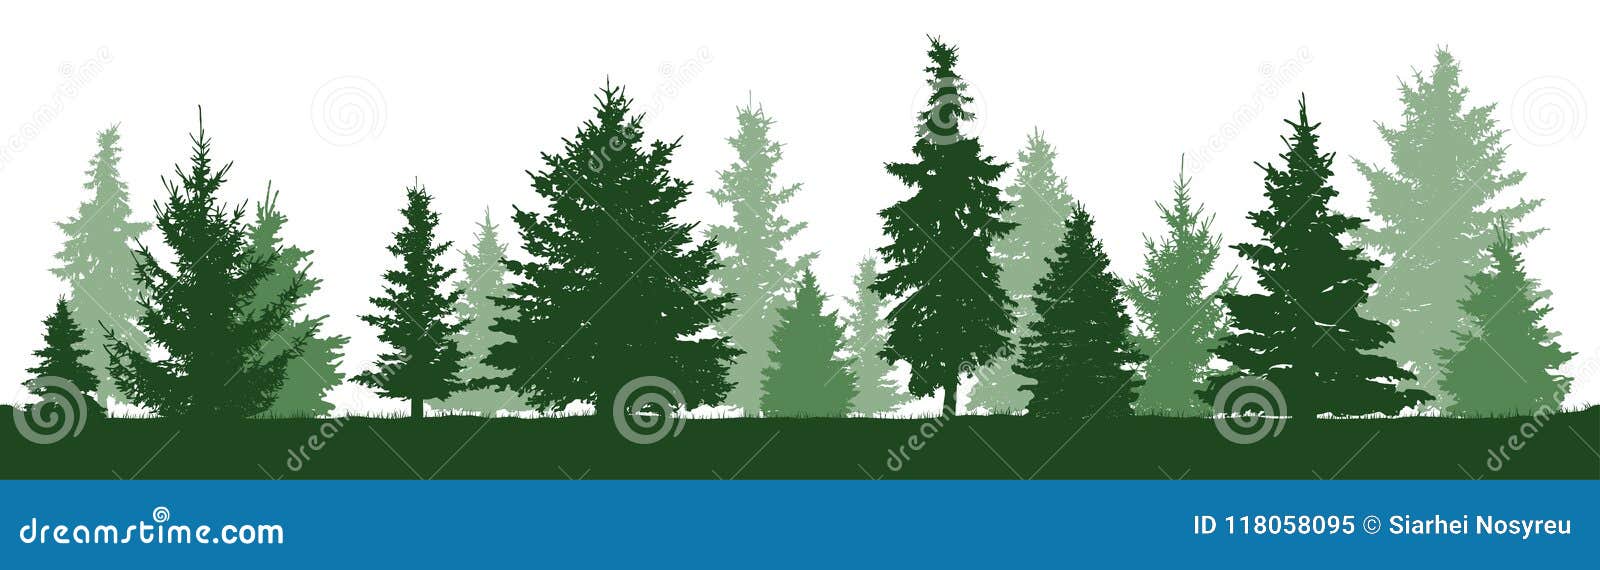 trees pine, fir, spruce, christmas tree. 